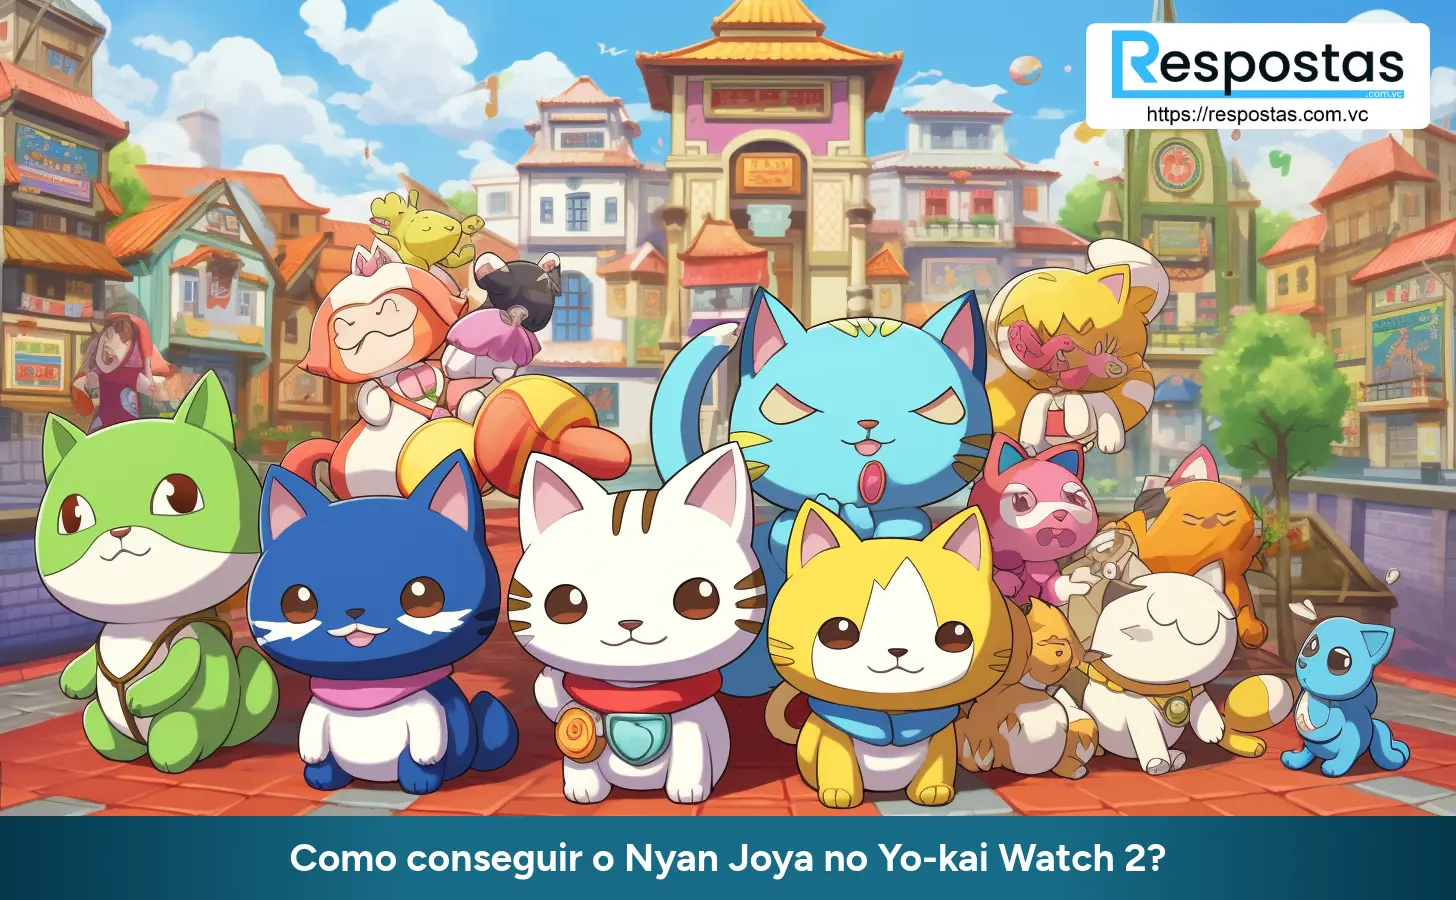 Como conseguir o Nyan Joya no Yo-kai Watch 2?